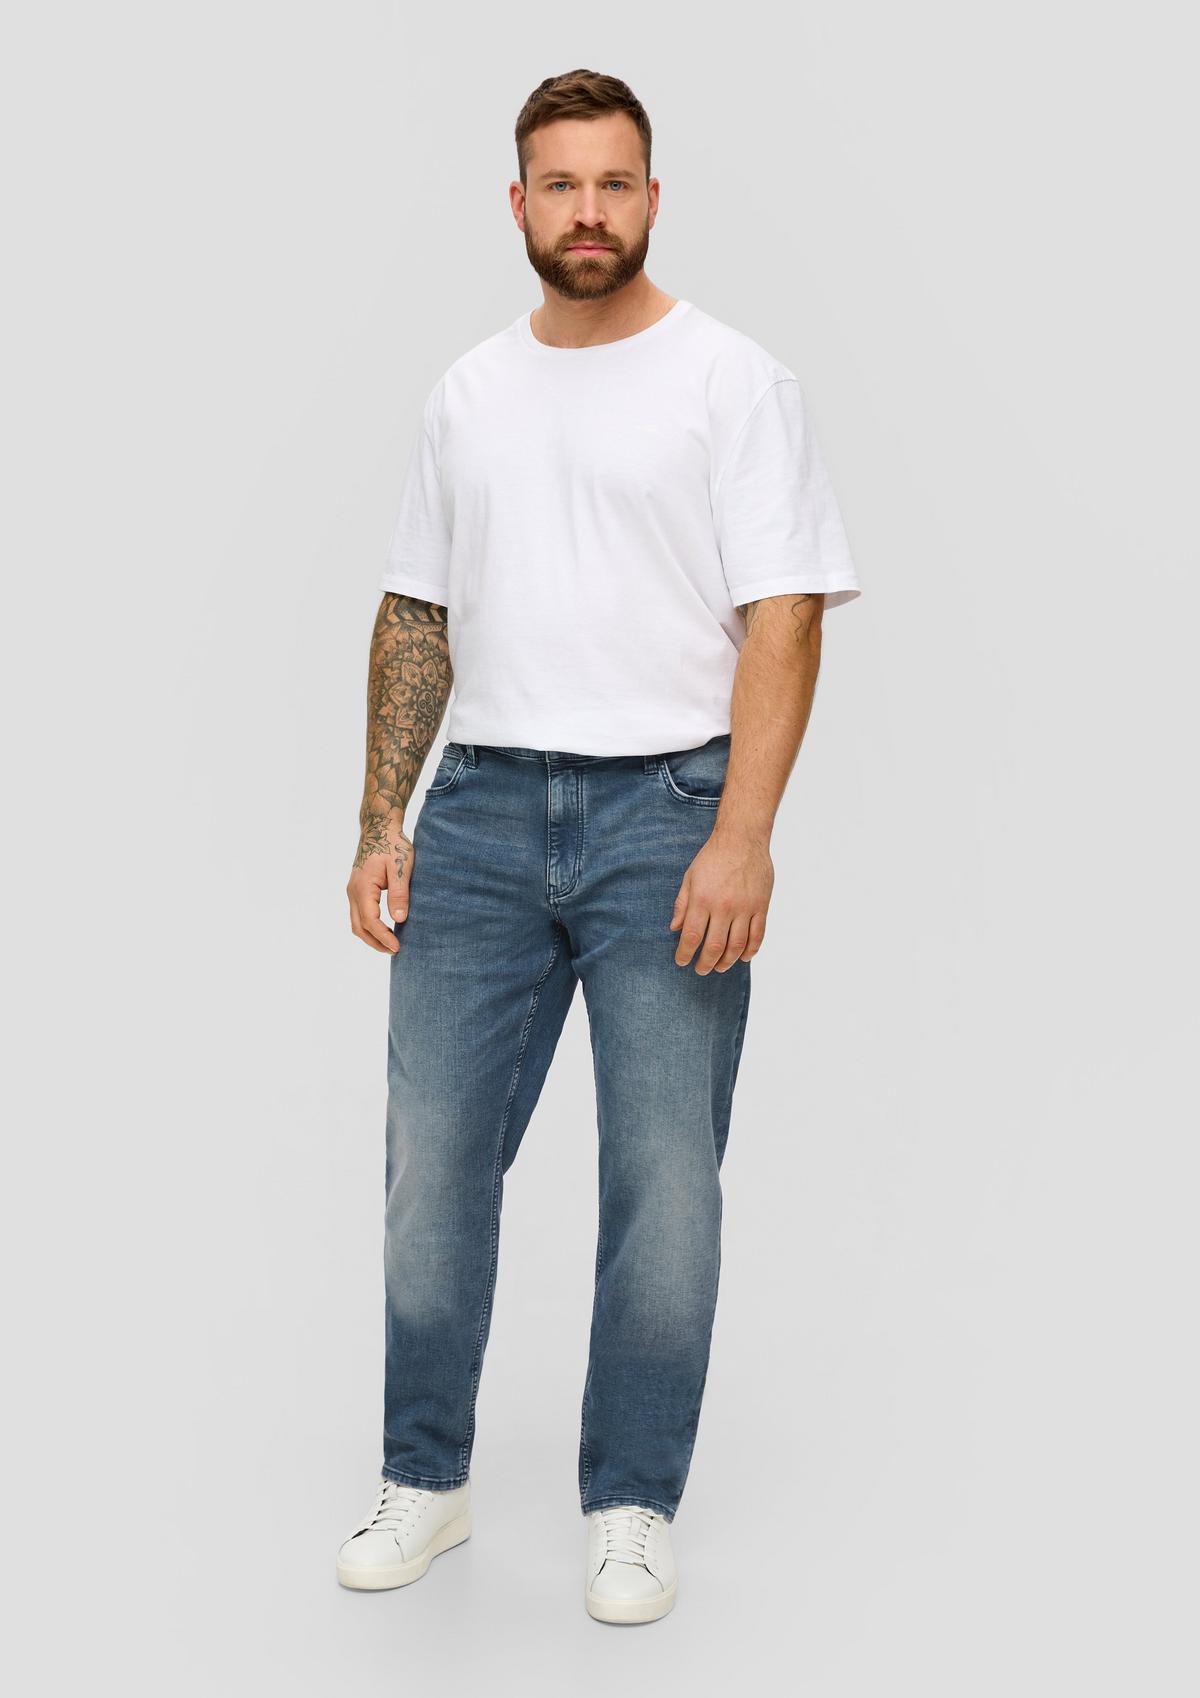 York jeans / regular fit / regular blue leg rise mid / 